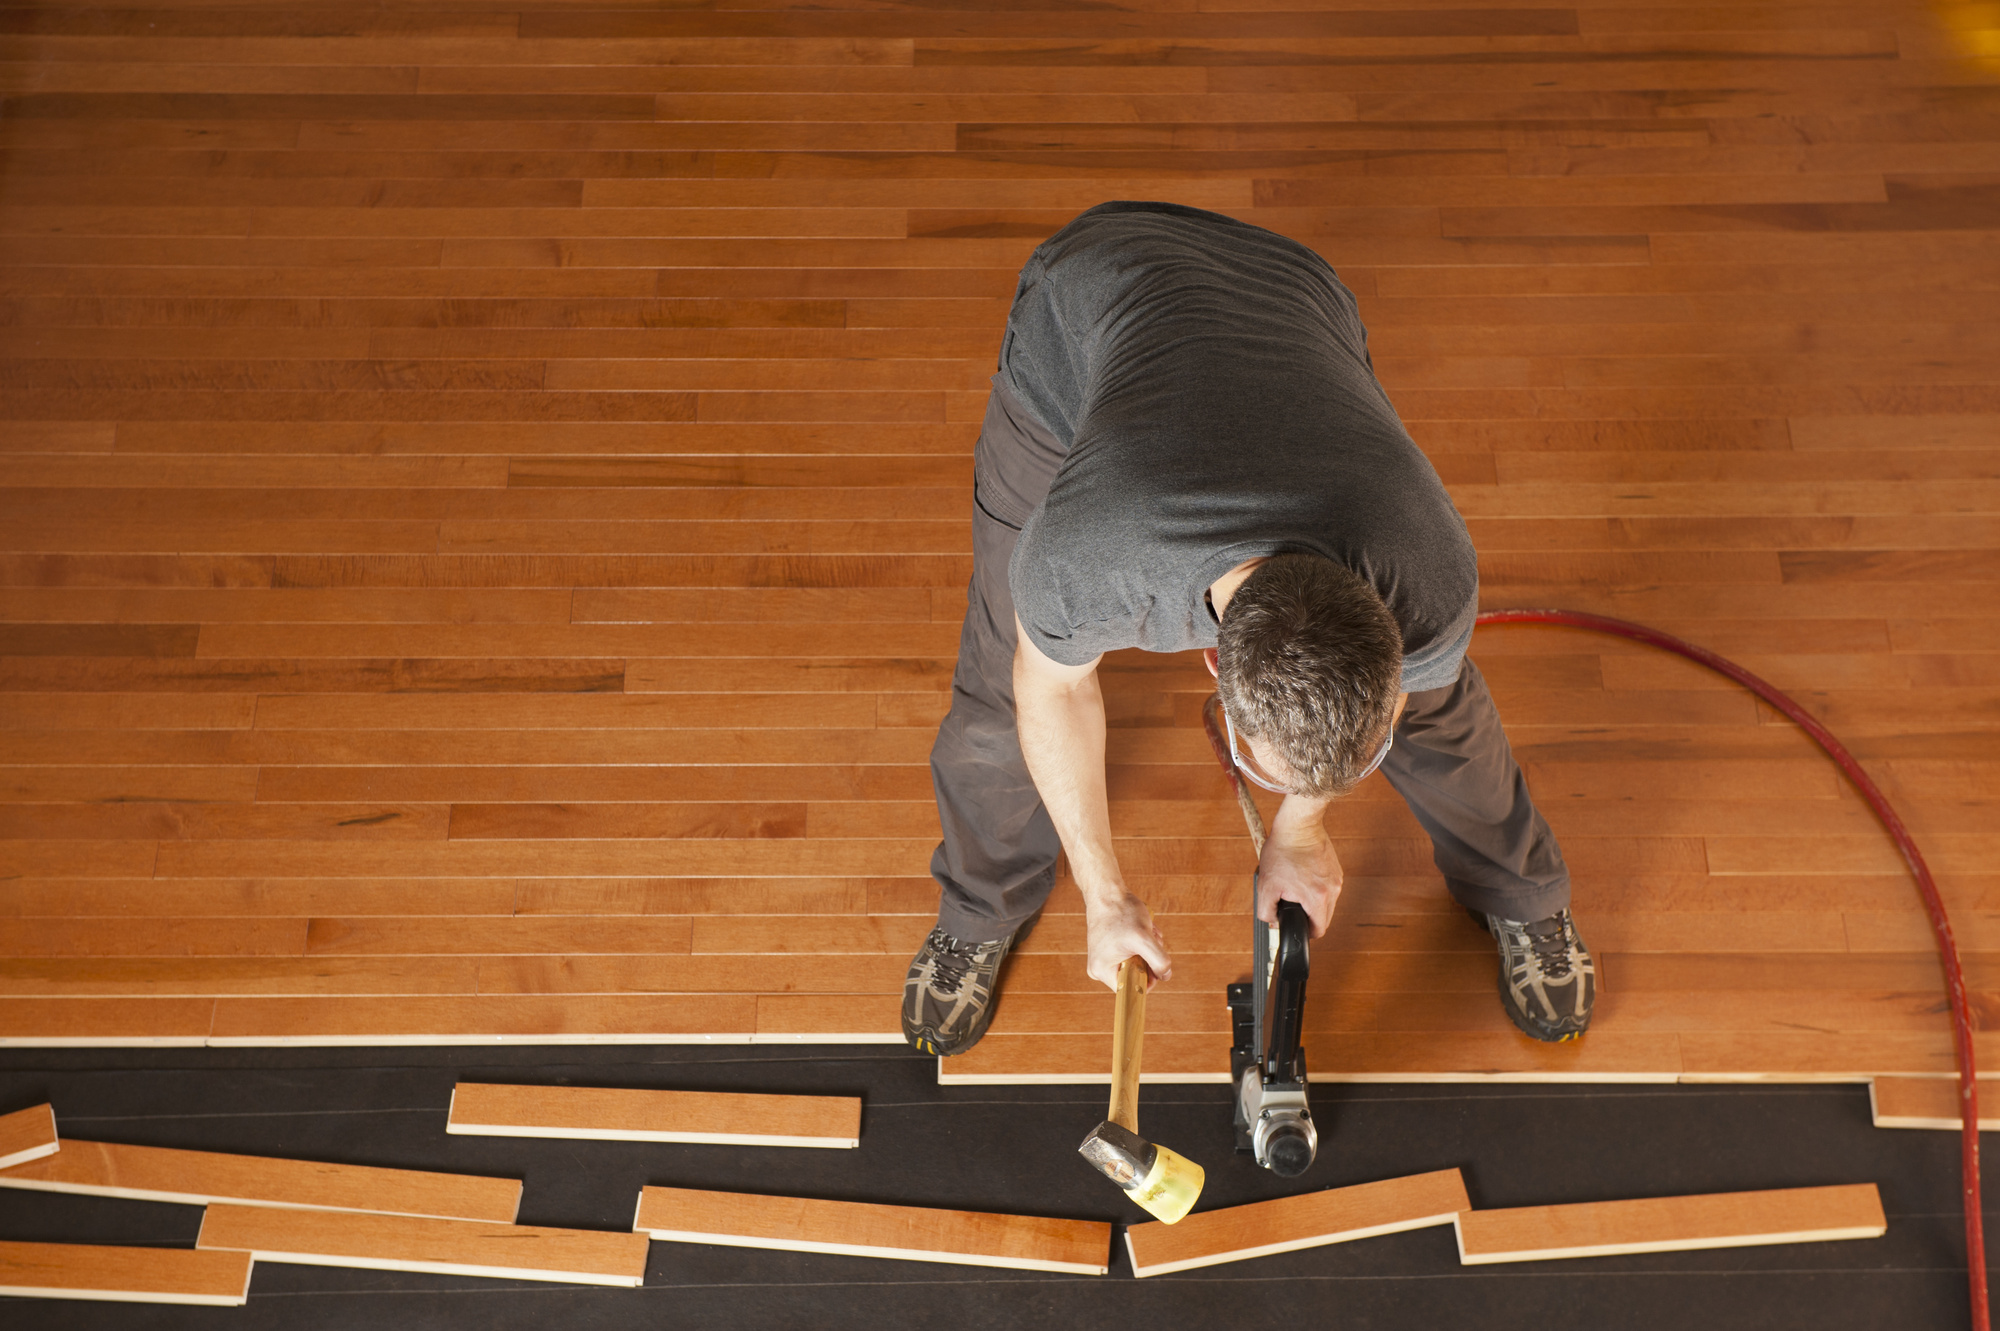 Hardwood Flooring Cost To Install, Hardwood Floor Installer Salary Range